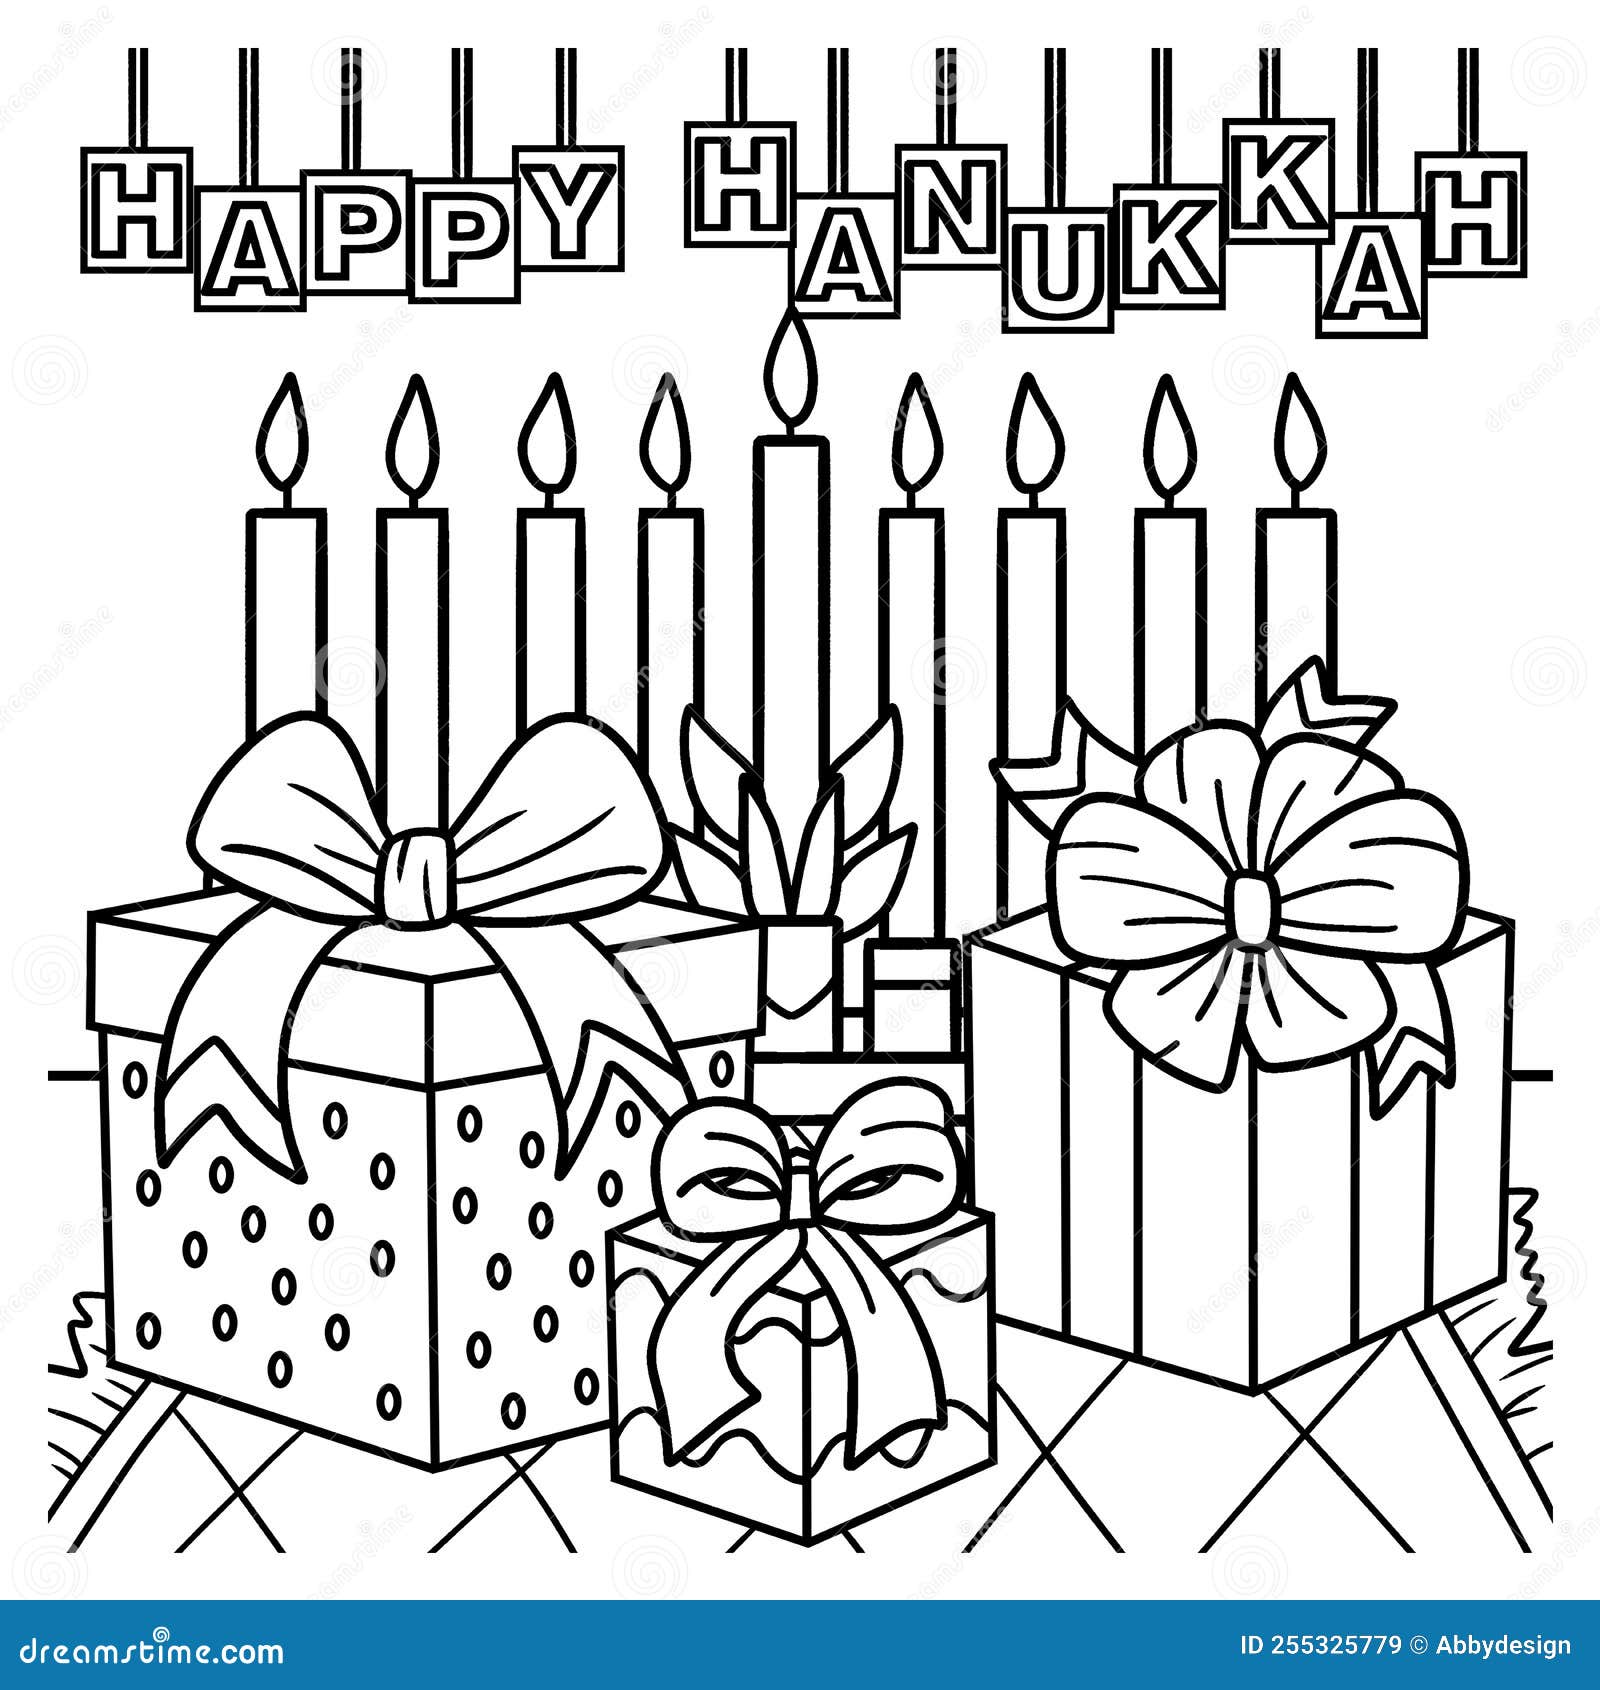 Happy hanukkah presents and menorah coloring page stock vector